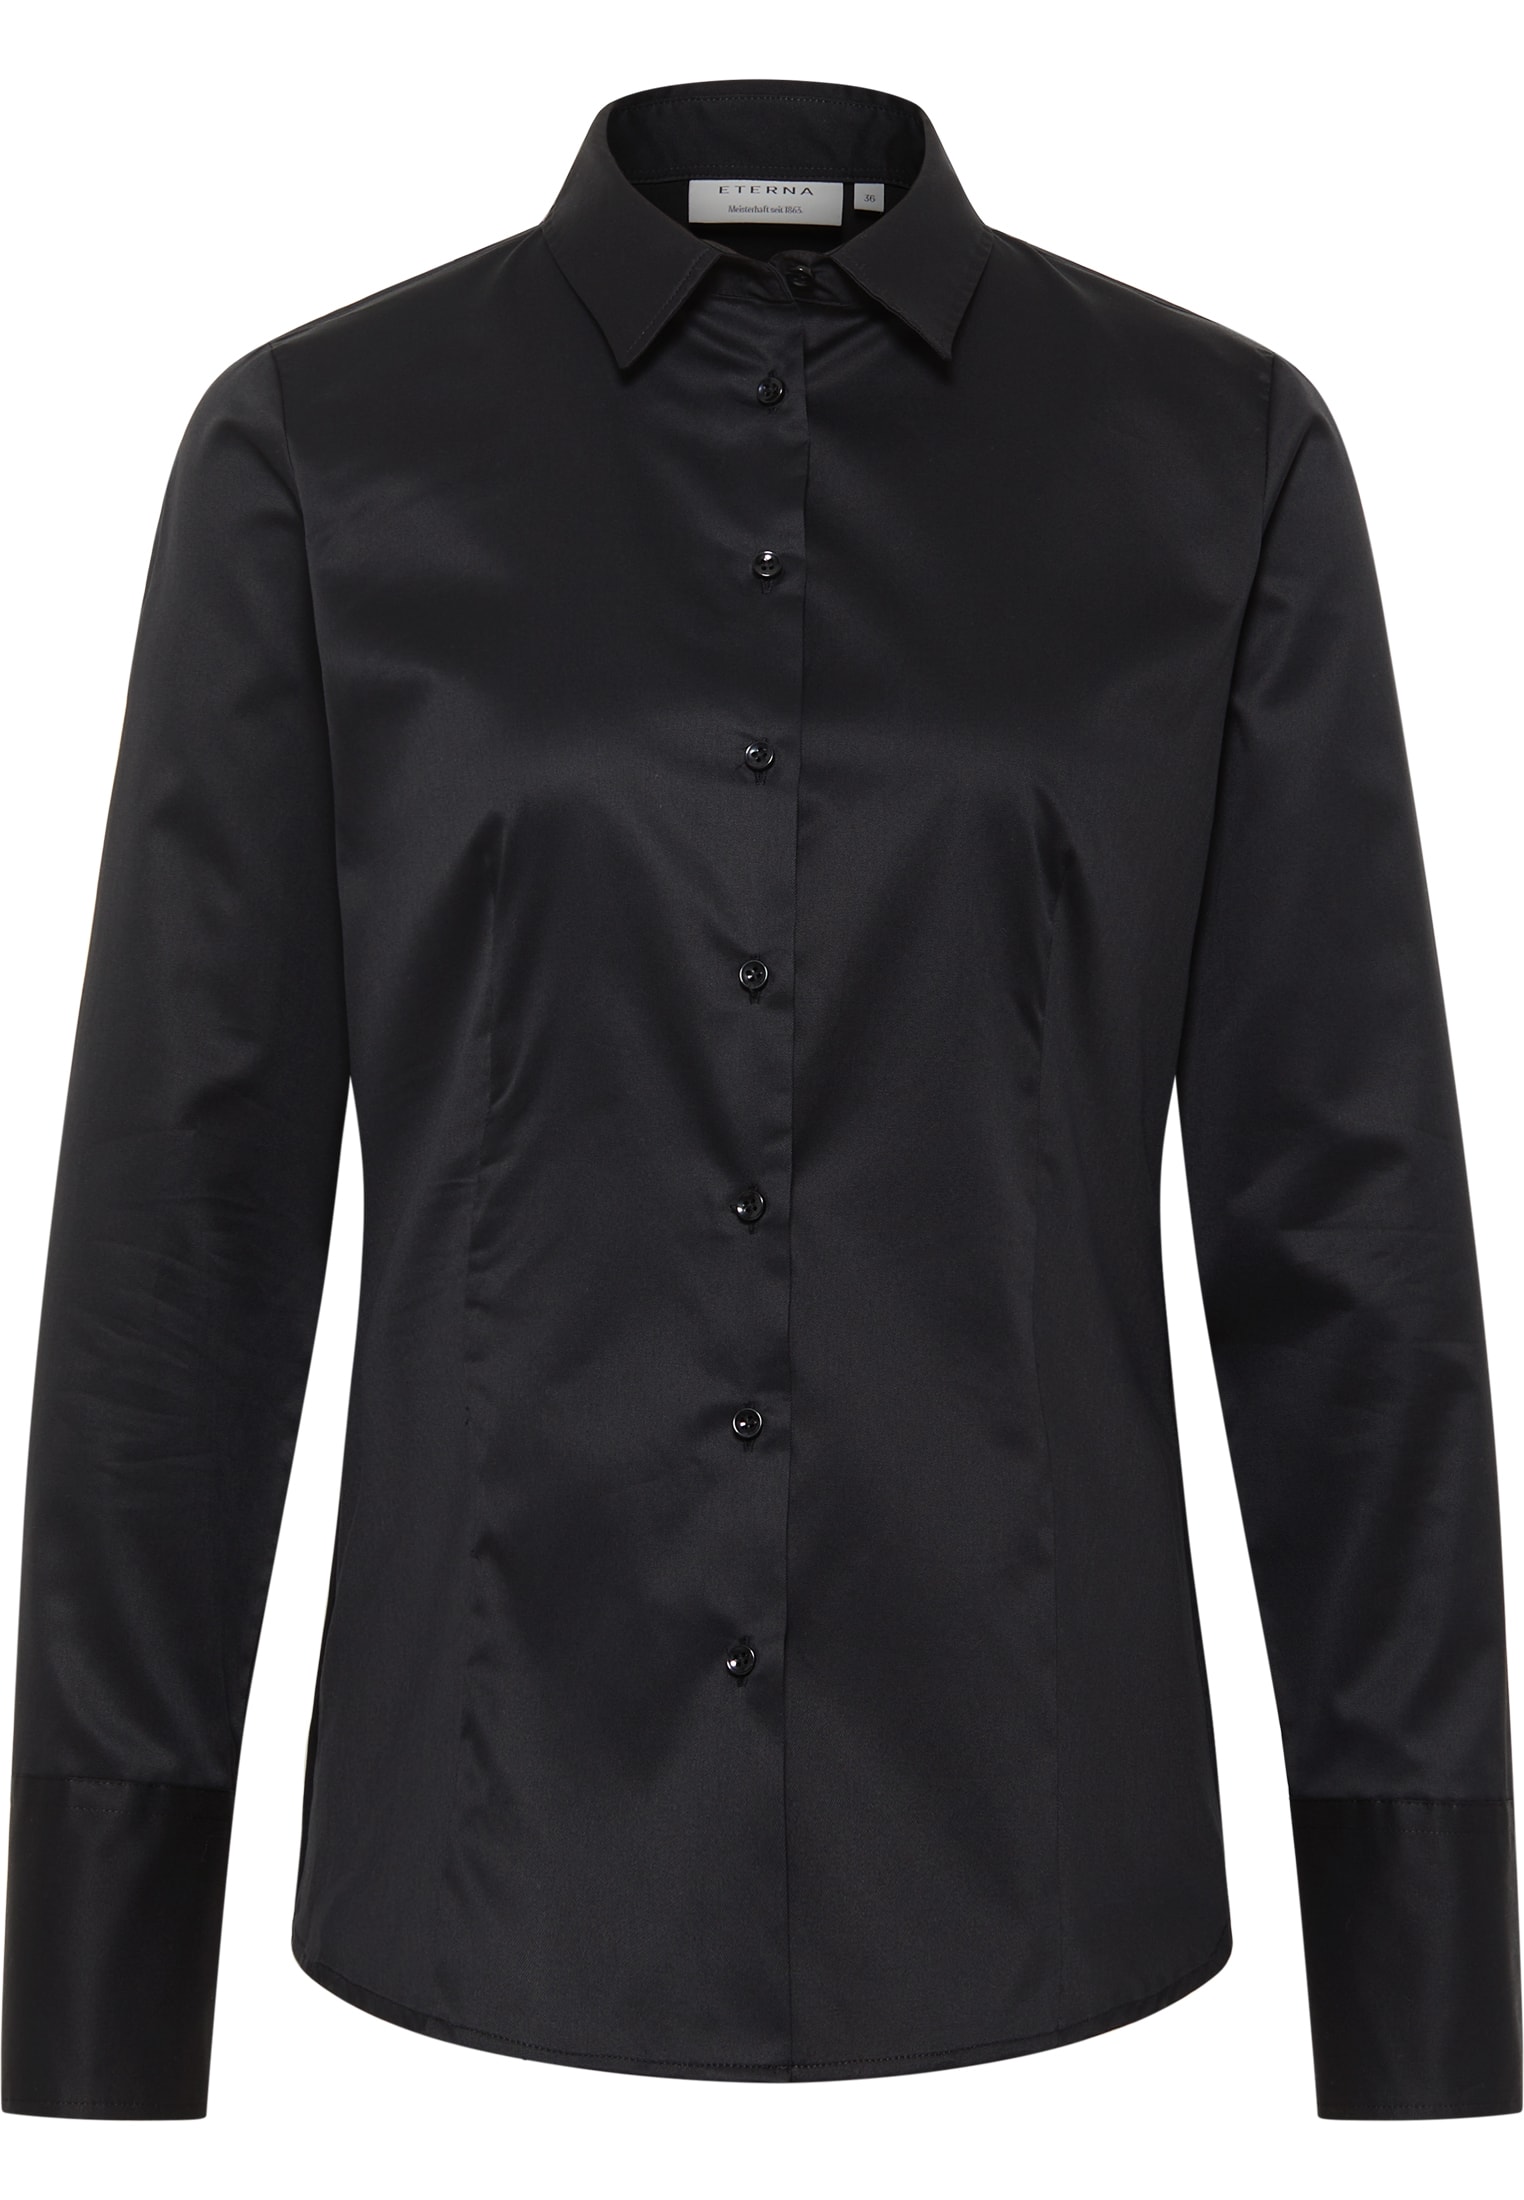 Cover Shirt Blouse in black plain | | 2BL00075-03-91-38-1/1 | | sleeve black long 38